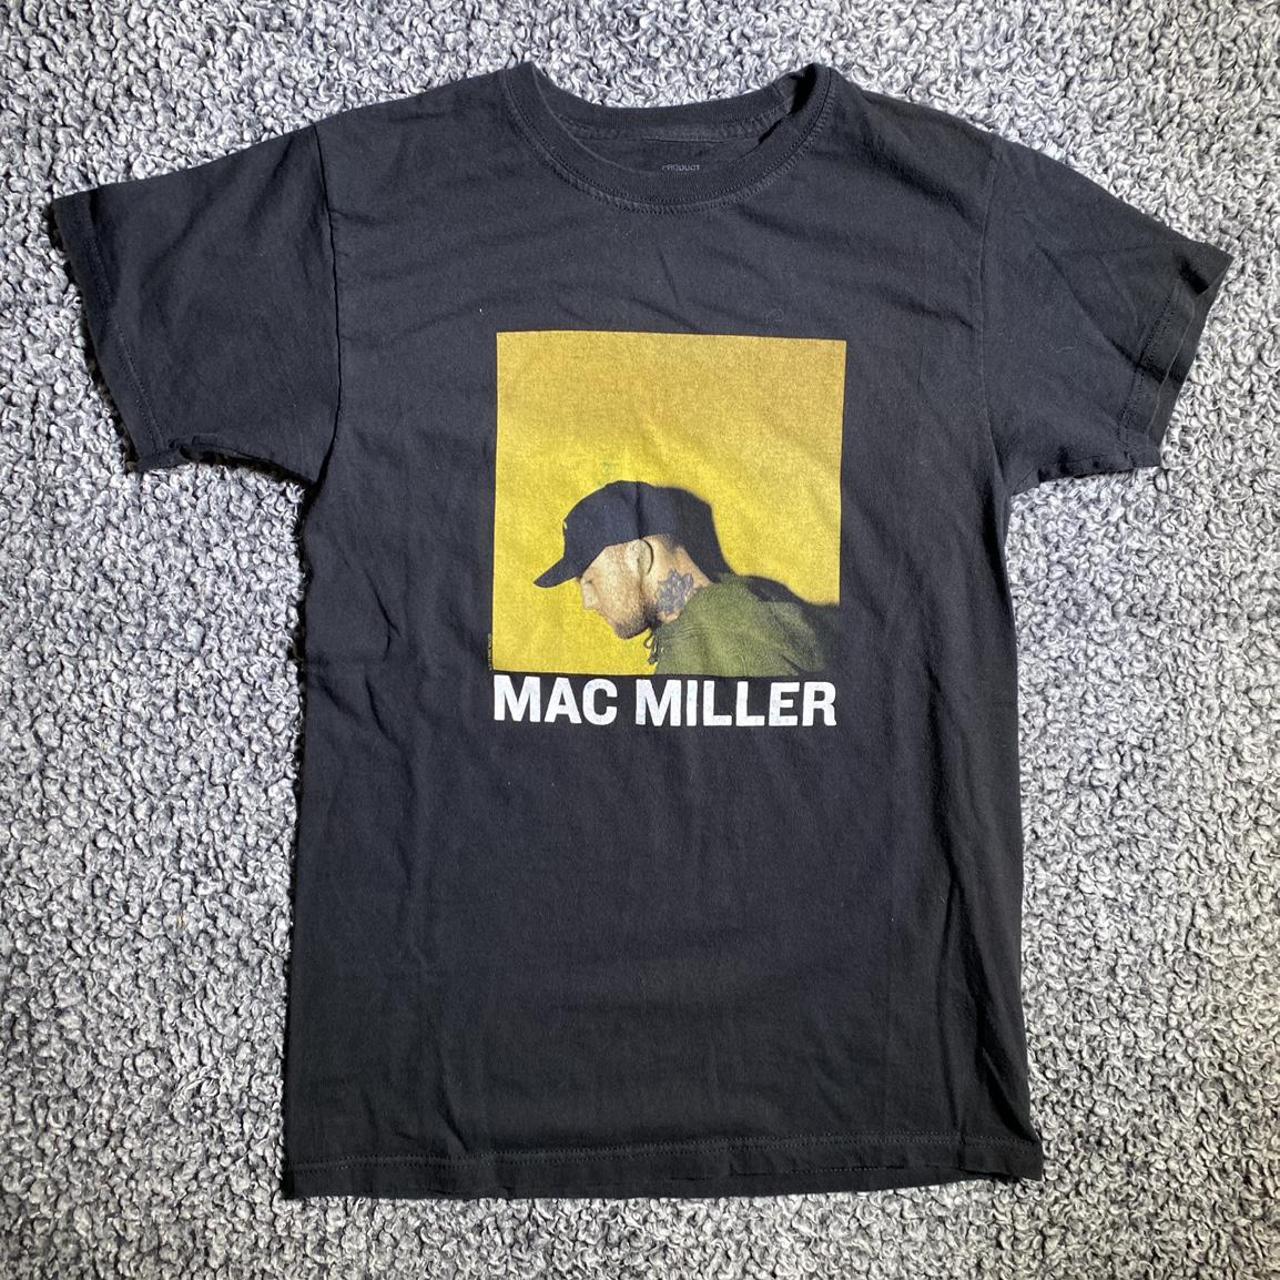 Product Image 1 - Mac miller shirt 
Size small/XS